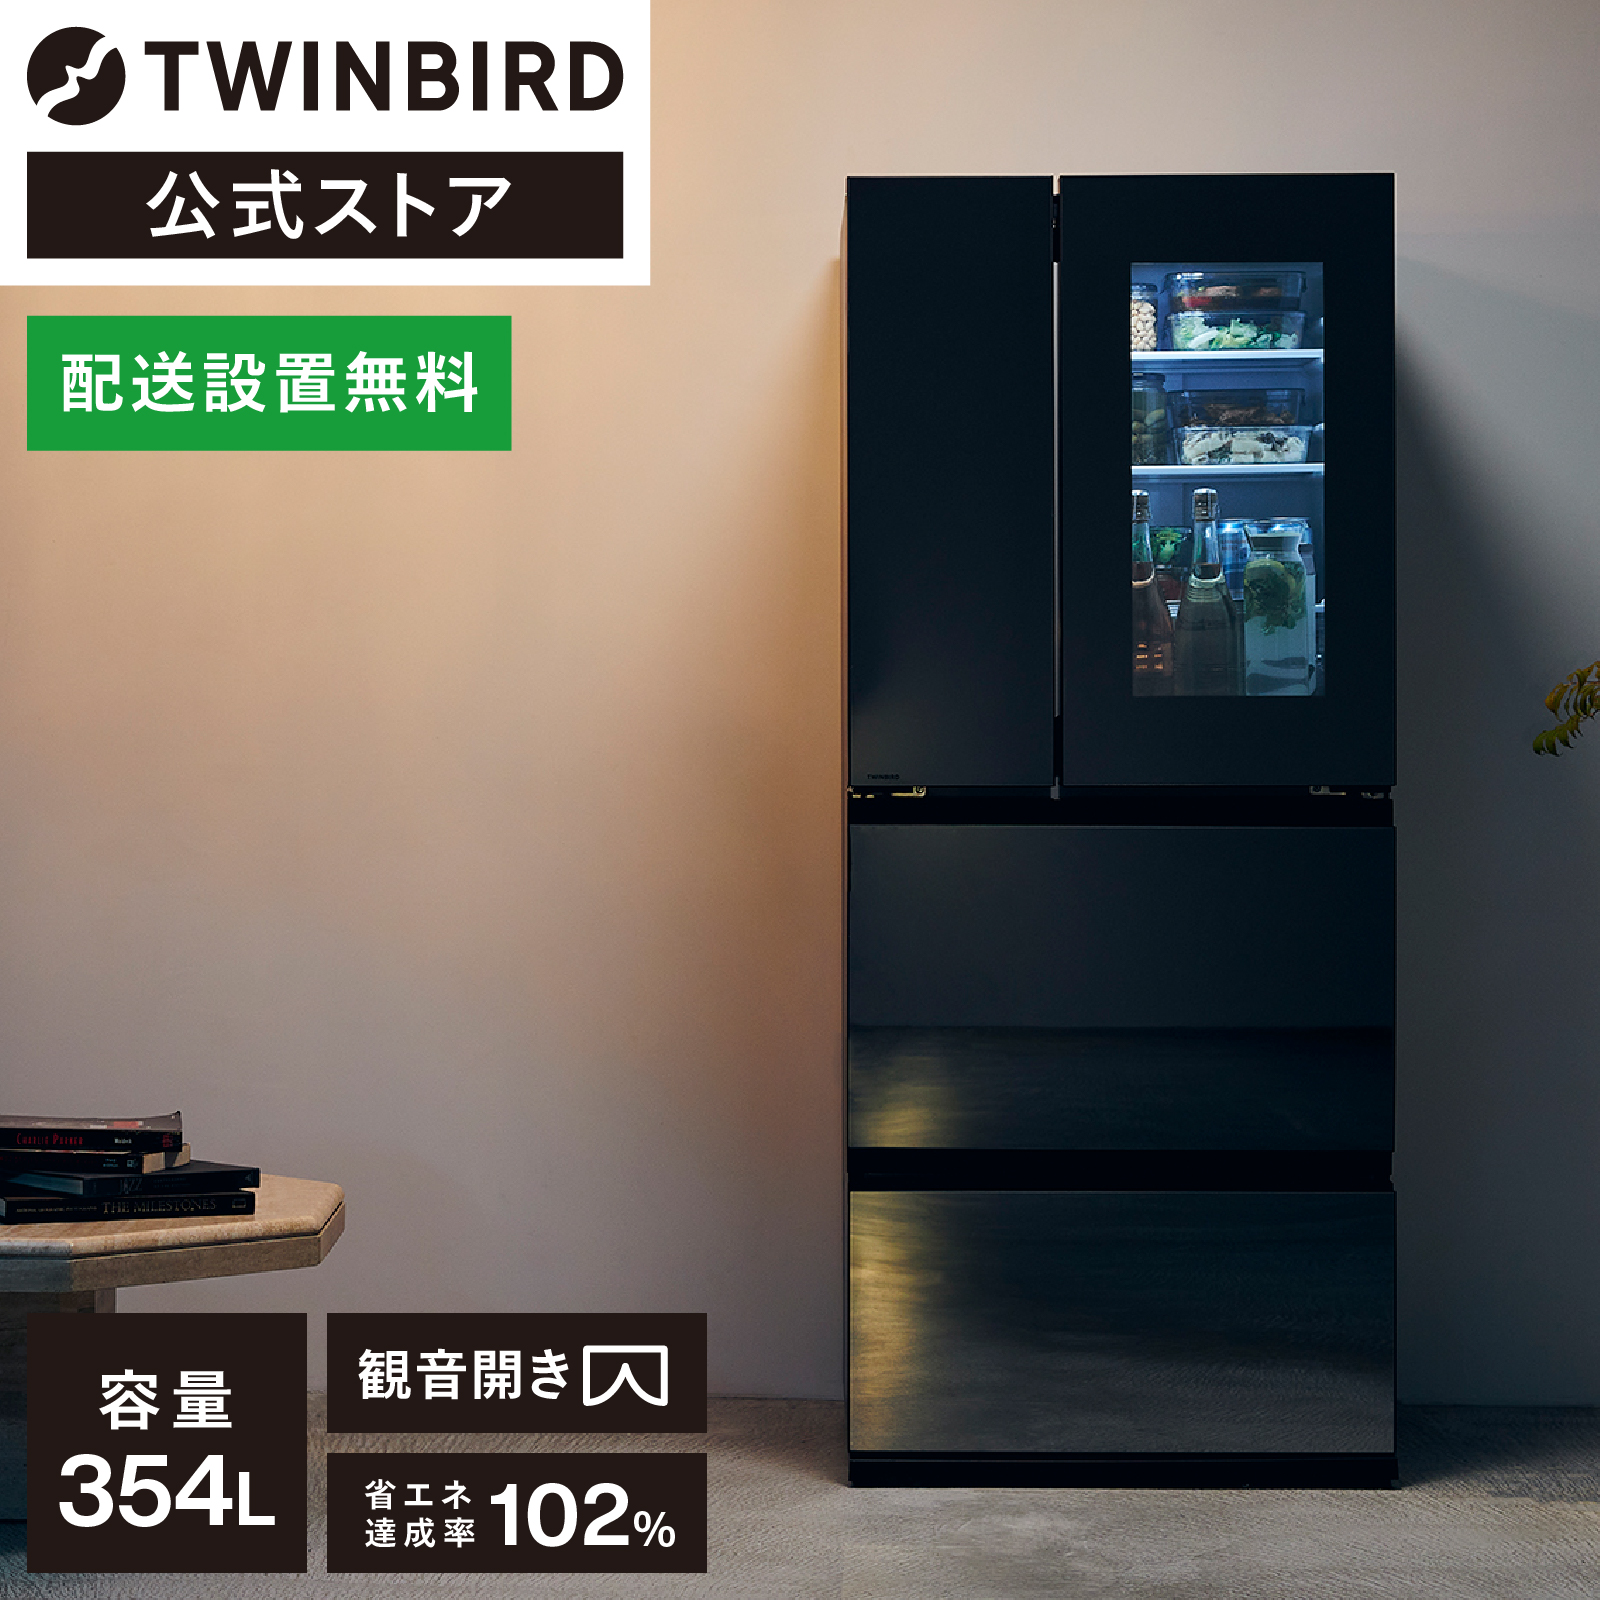 TWINBIRD 電気冷凍冷蔵庫 HR-D286型 - 家電